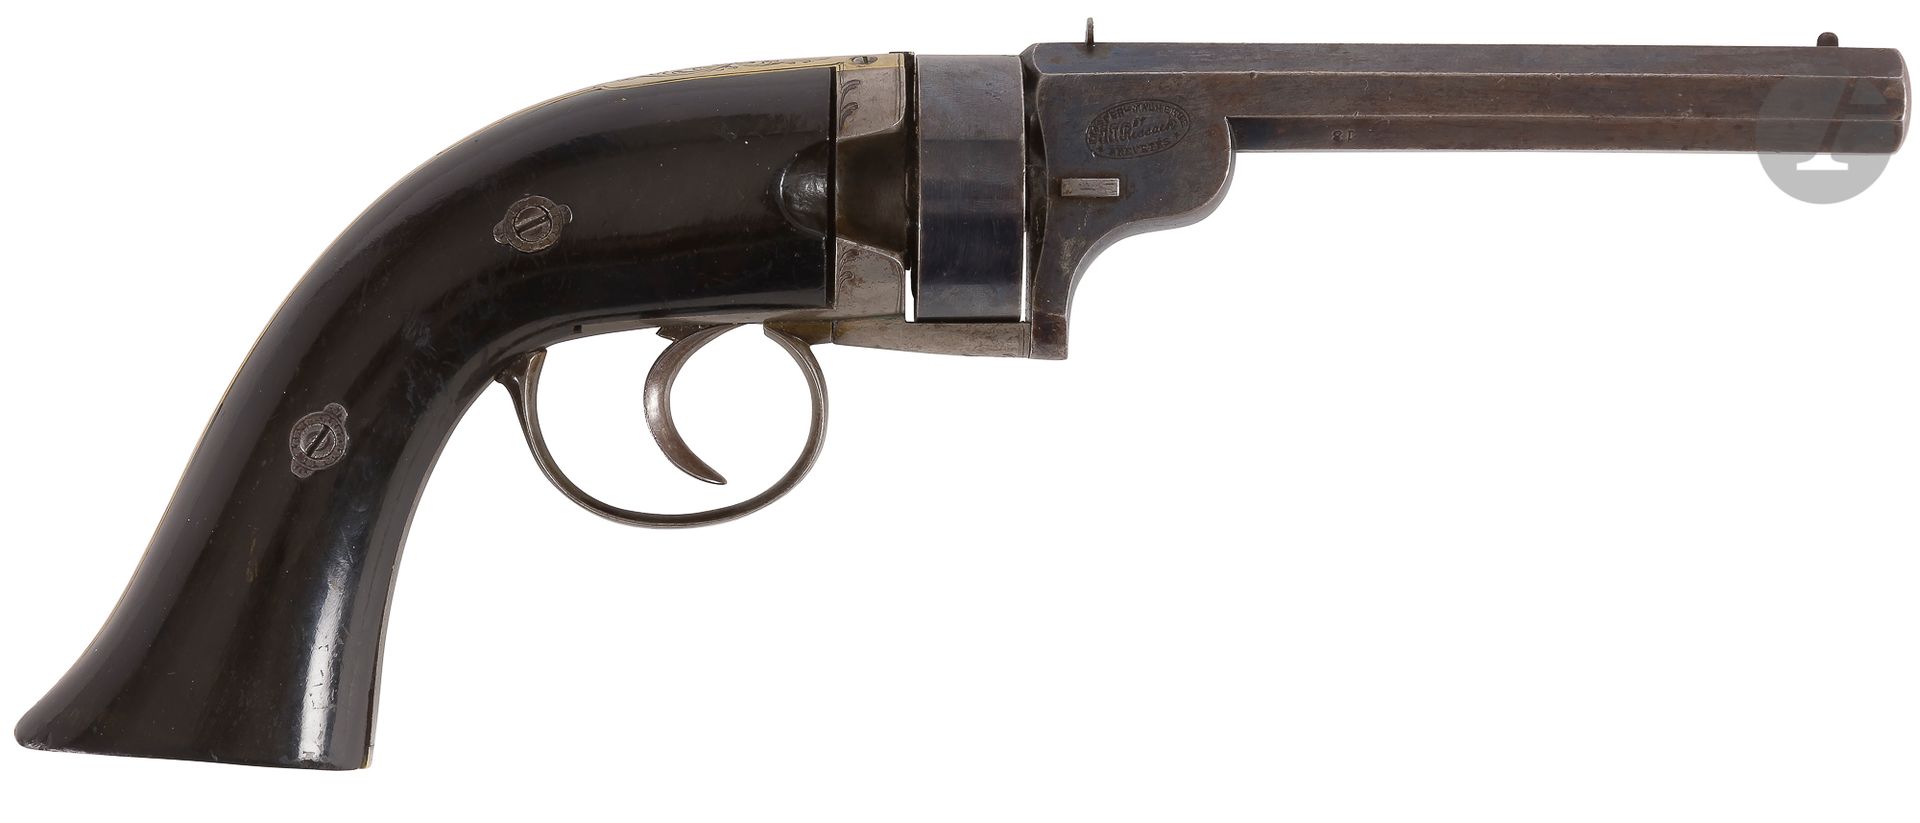 Null 罕见的 "Malherbe & Rissack "系统左轮手枪，6连发，9毫米短缘火，带内锤。
枪管很光滑，印有制造商和
发明者
的雷鸣般的声音
"P&hellip;